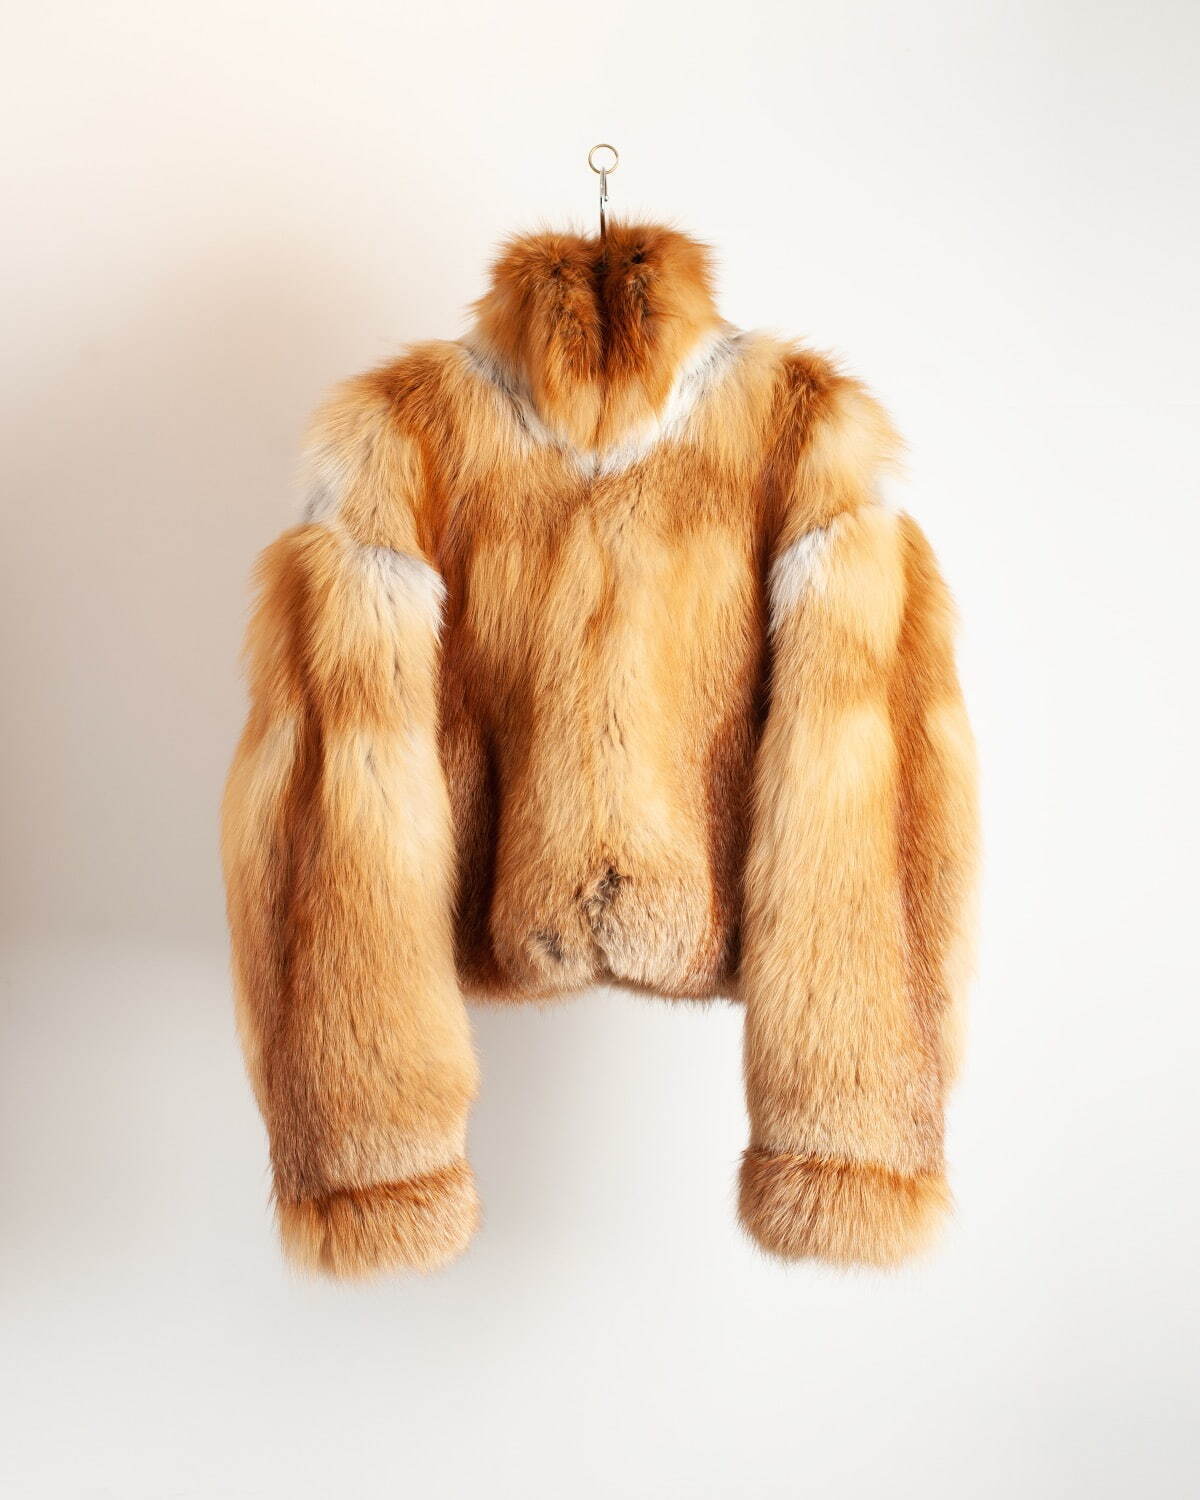 Japanese Wild Fox Fur Jacket 440,000円